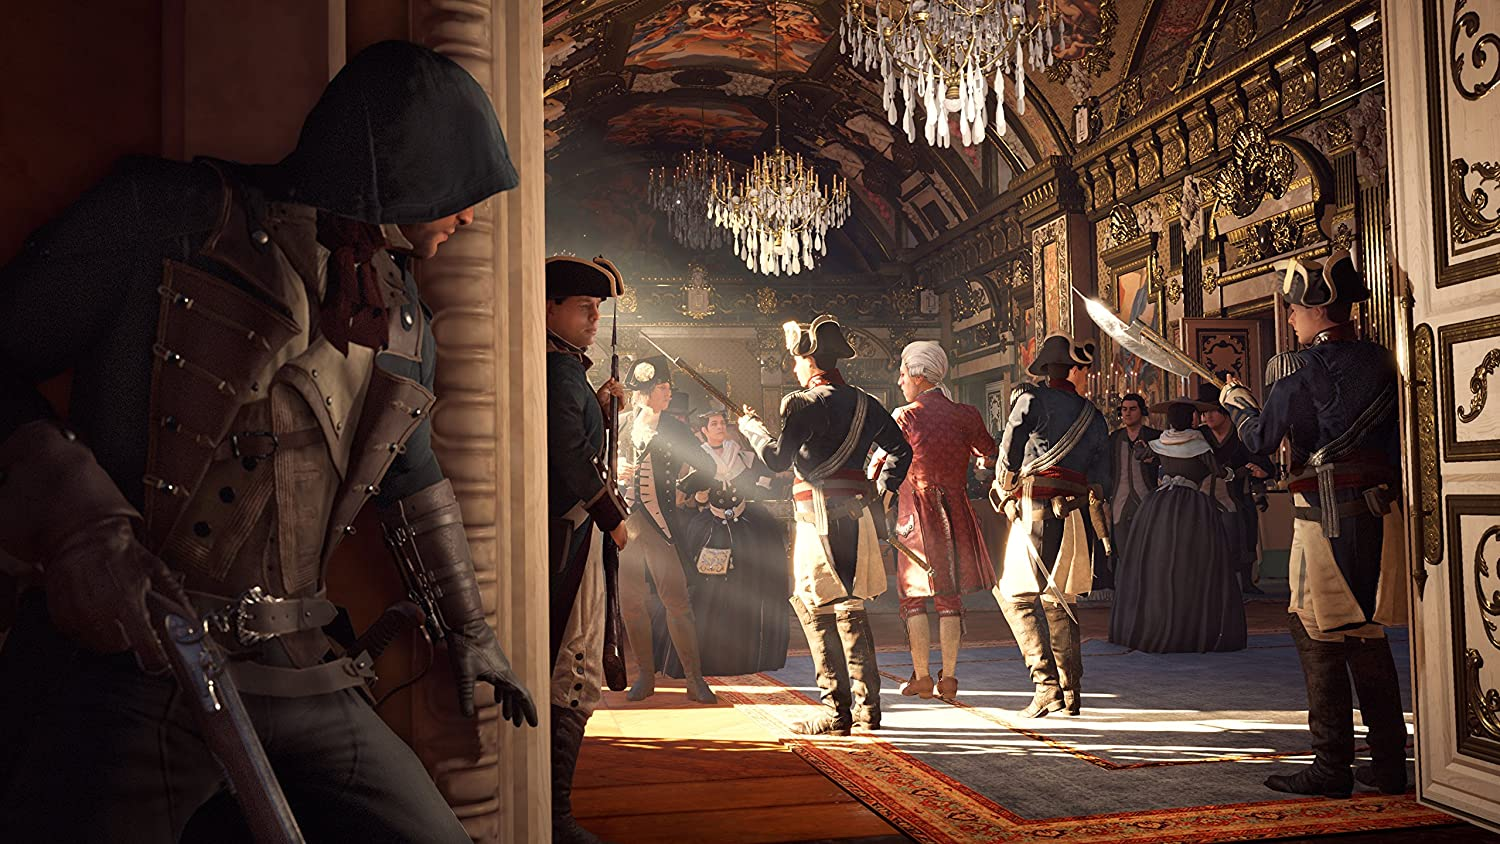 Assassin\'s Creed - - 4] [PlayStation Unity